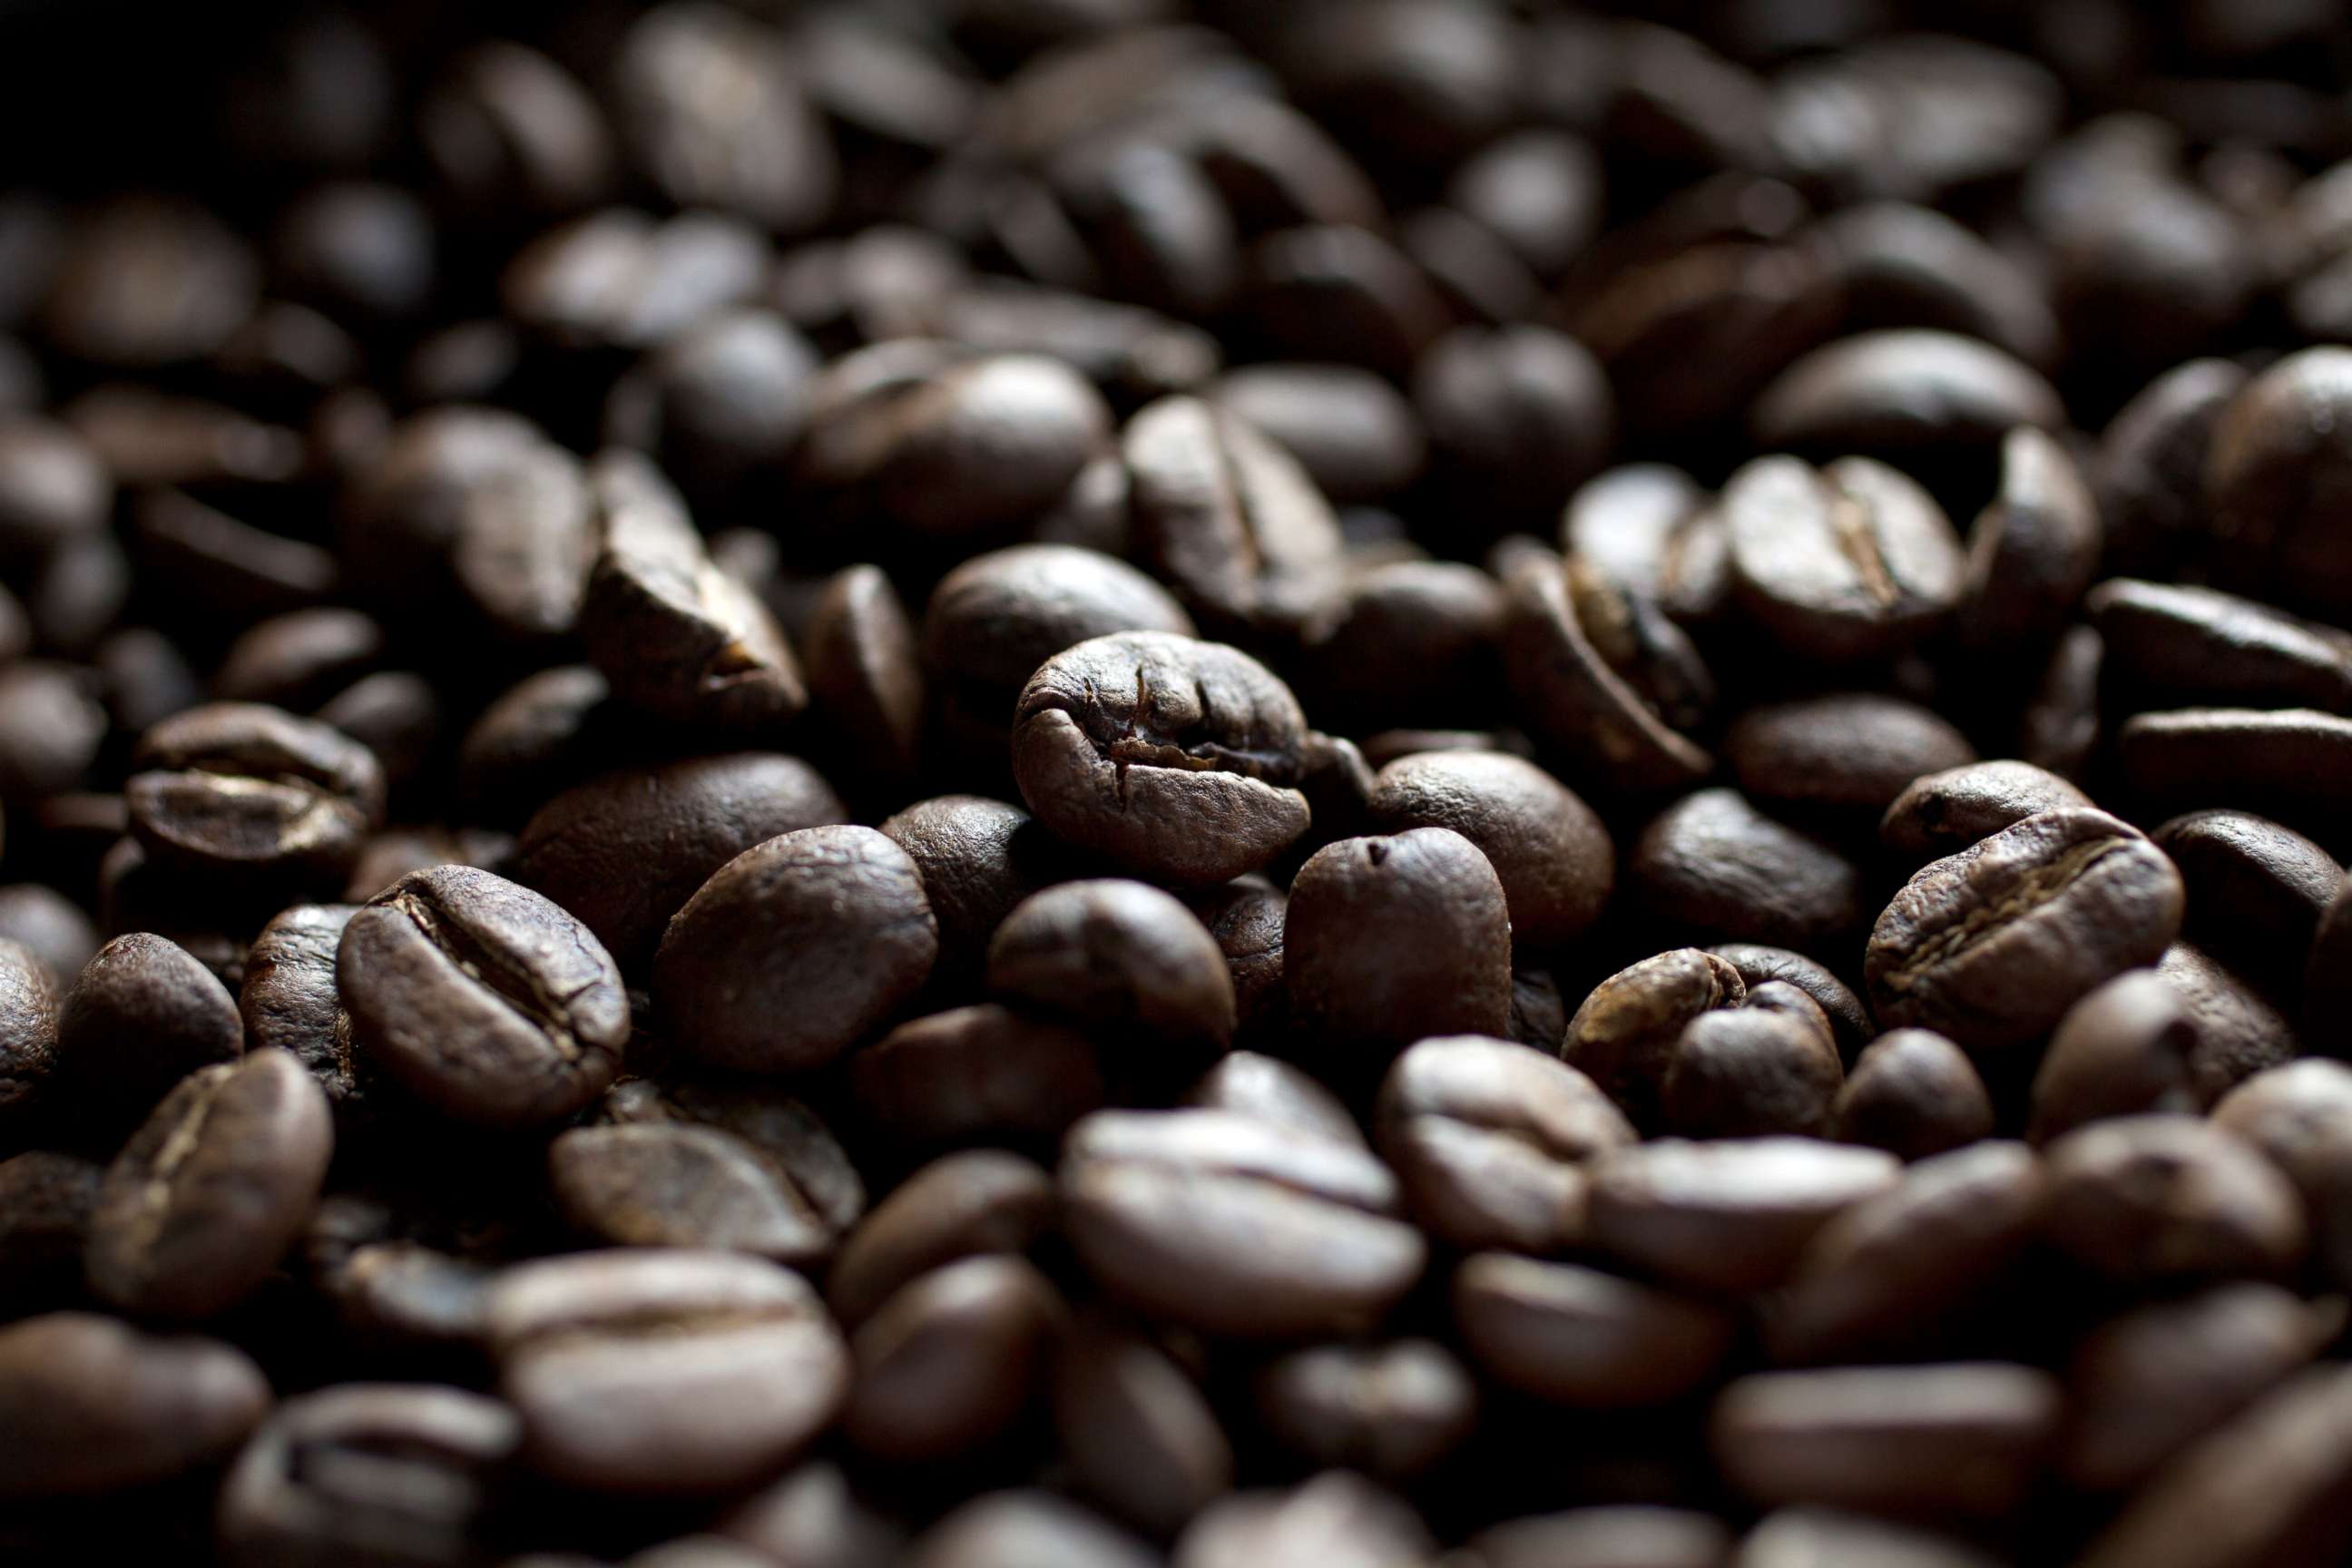 PHOTO: Stock photo of coffee beans.